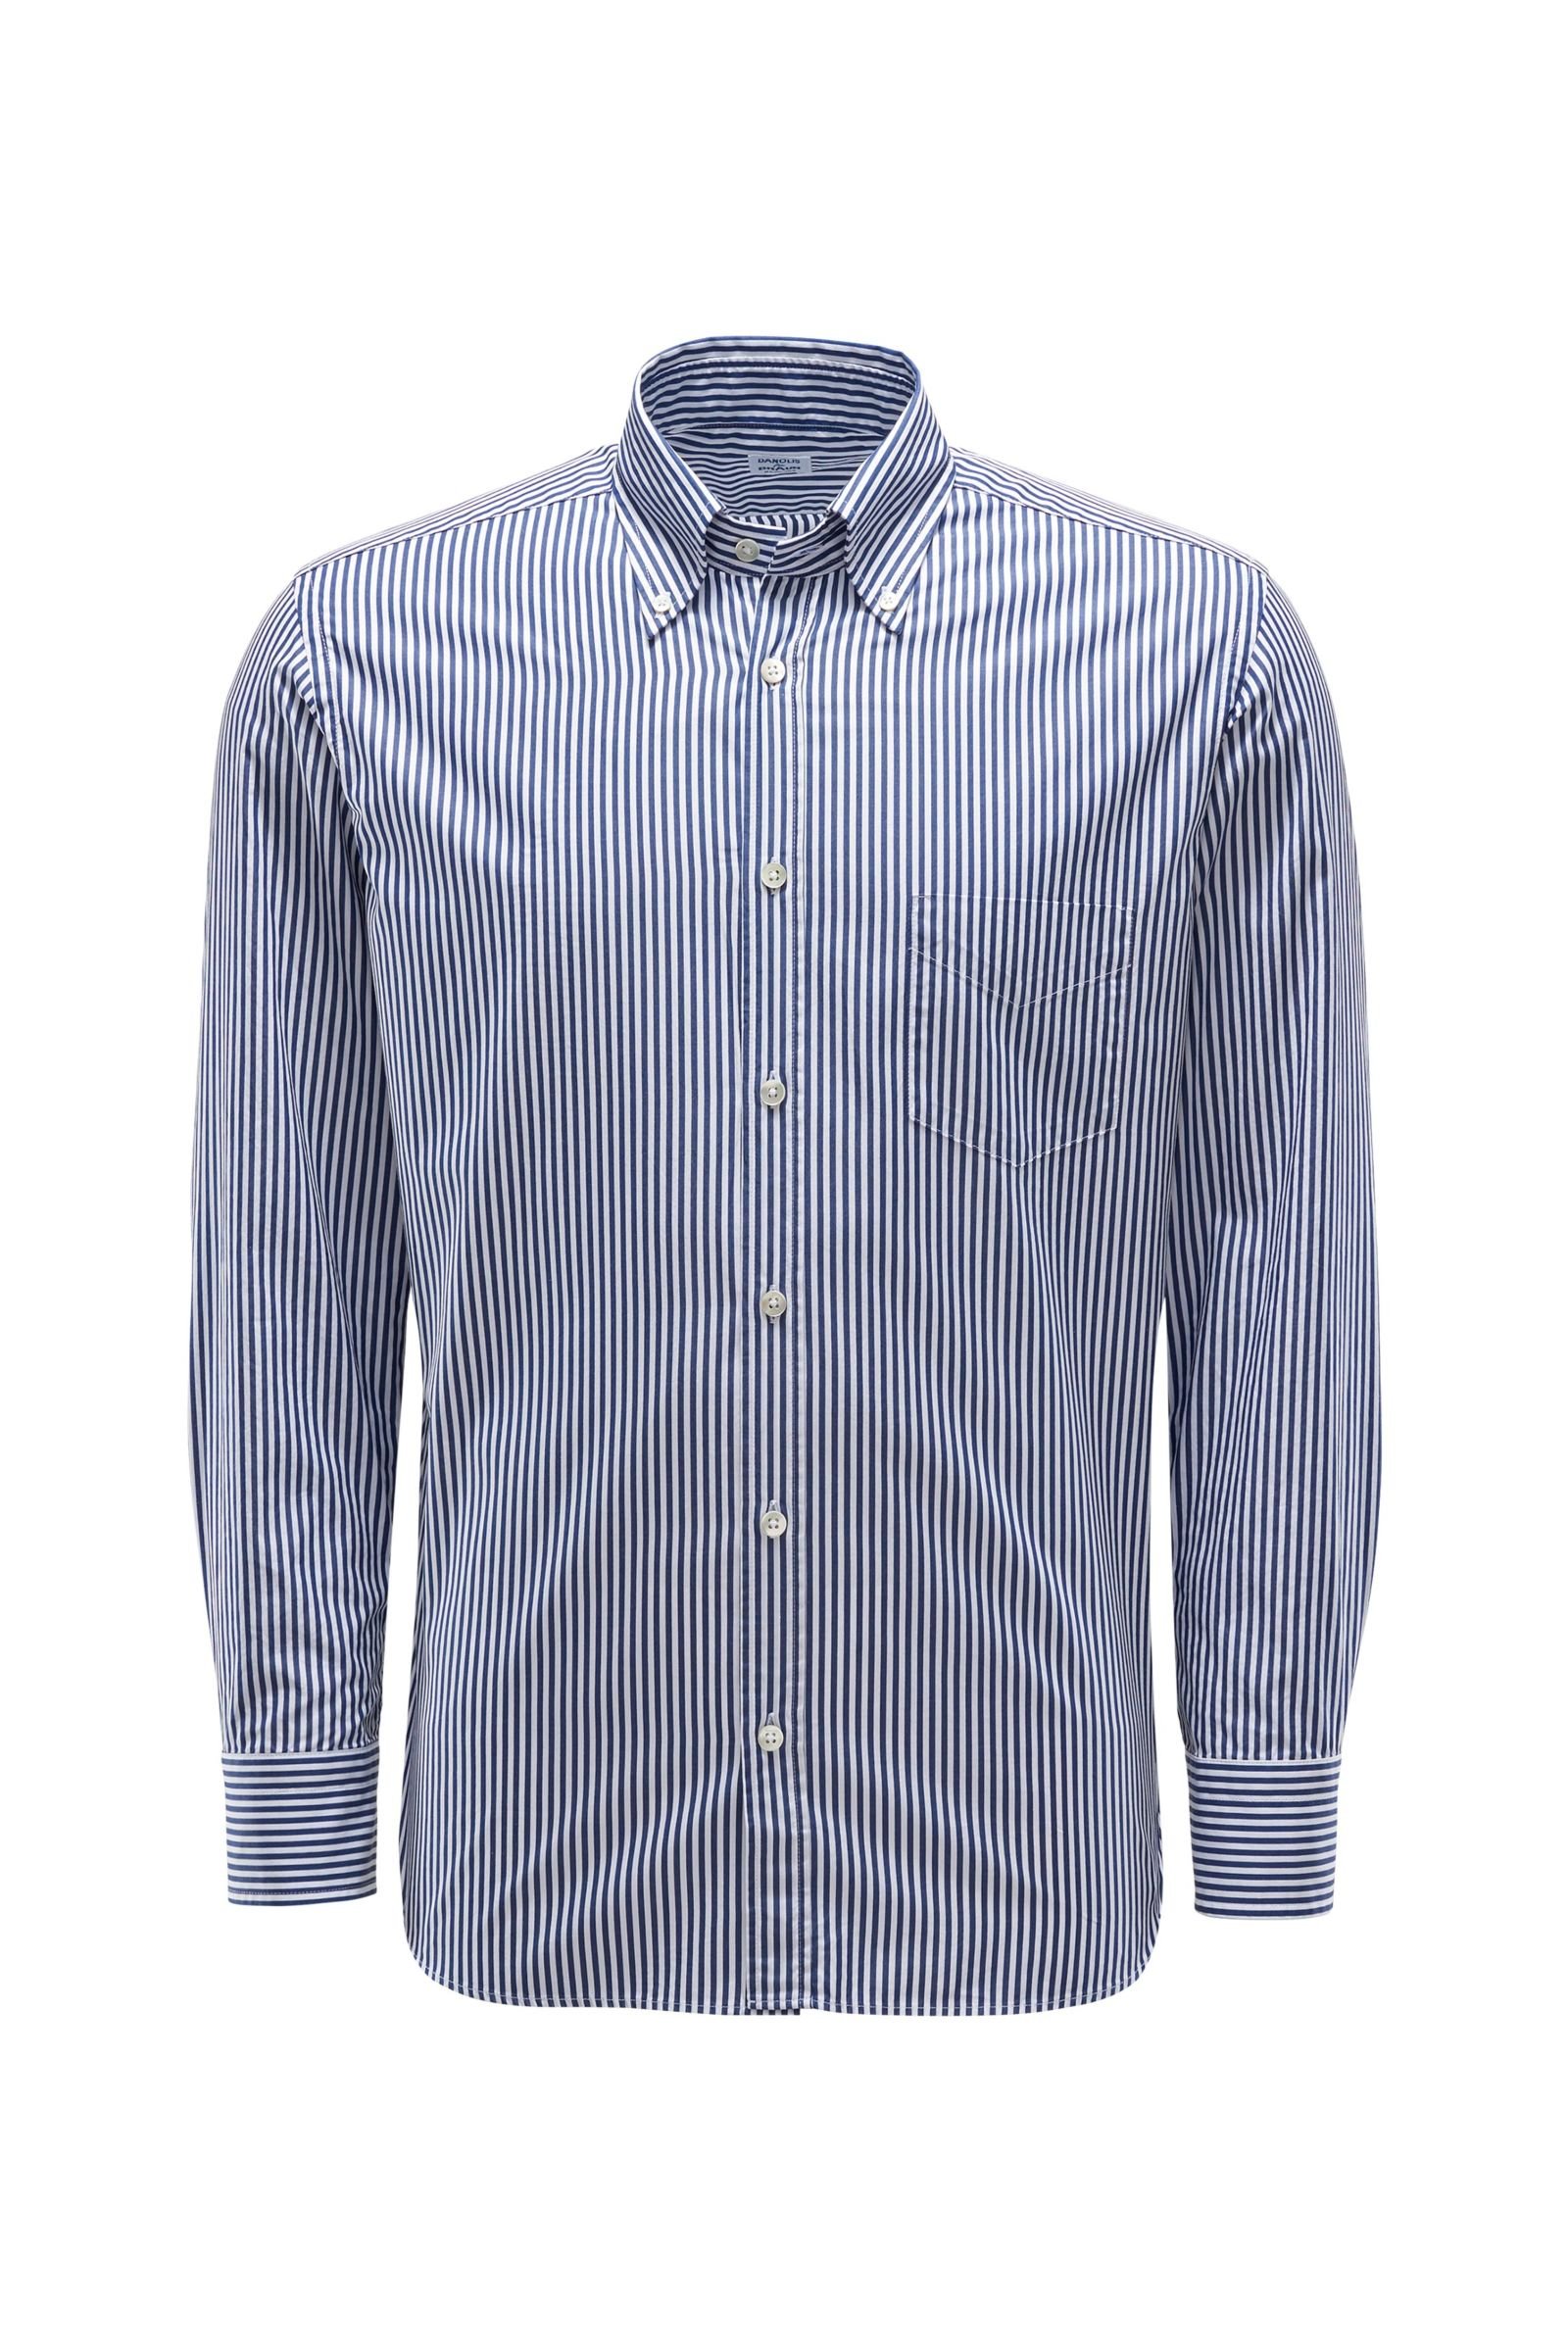 Casual shirt button-down collar navy/white striped